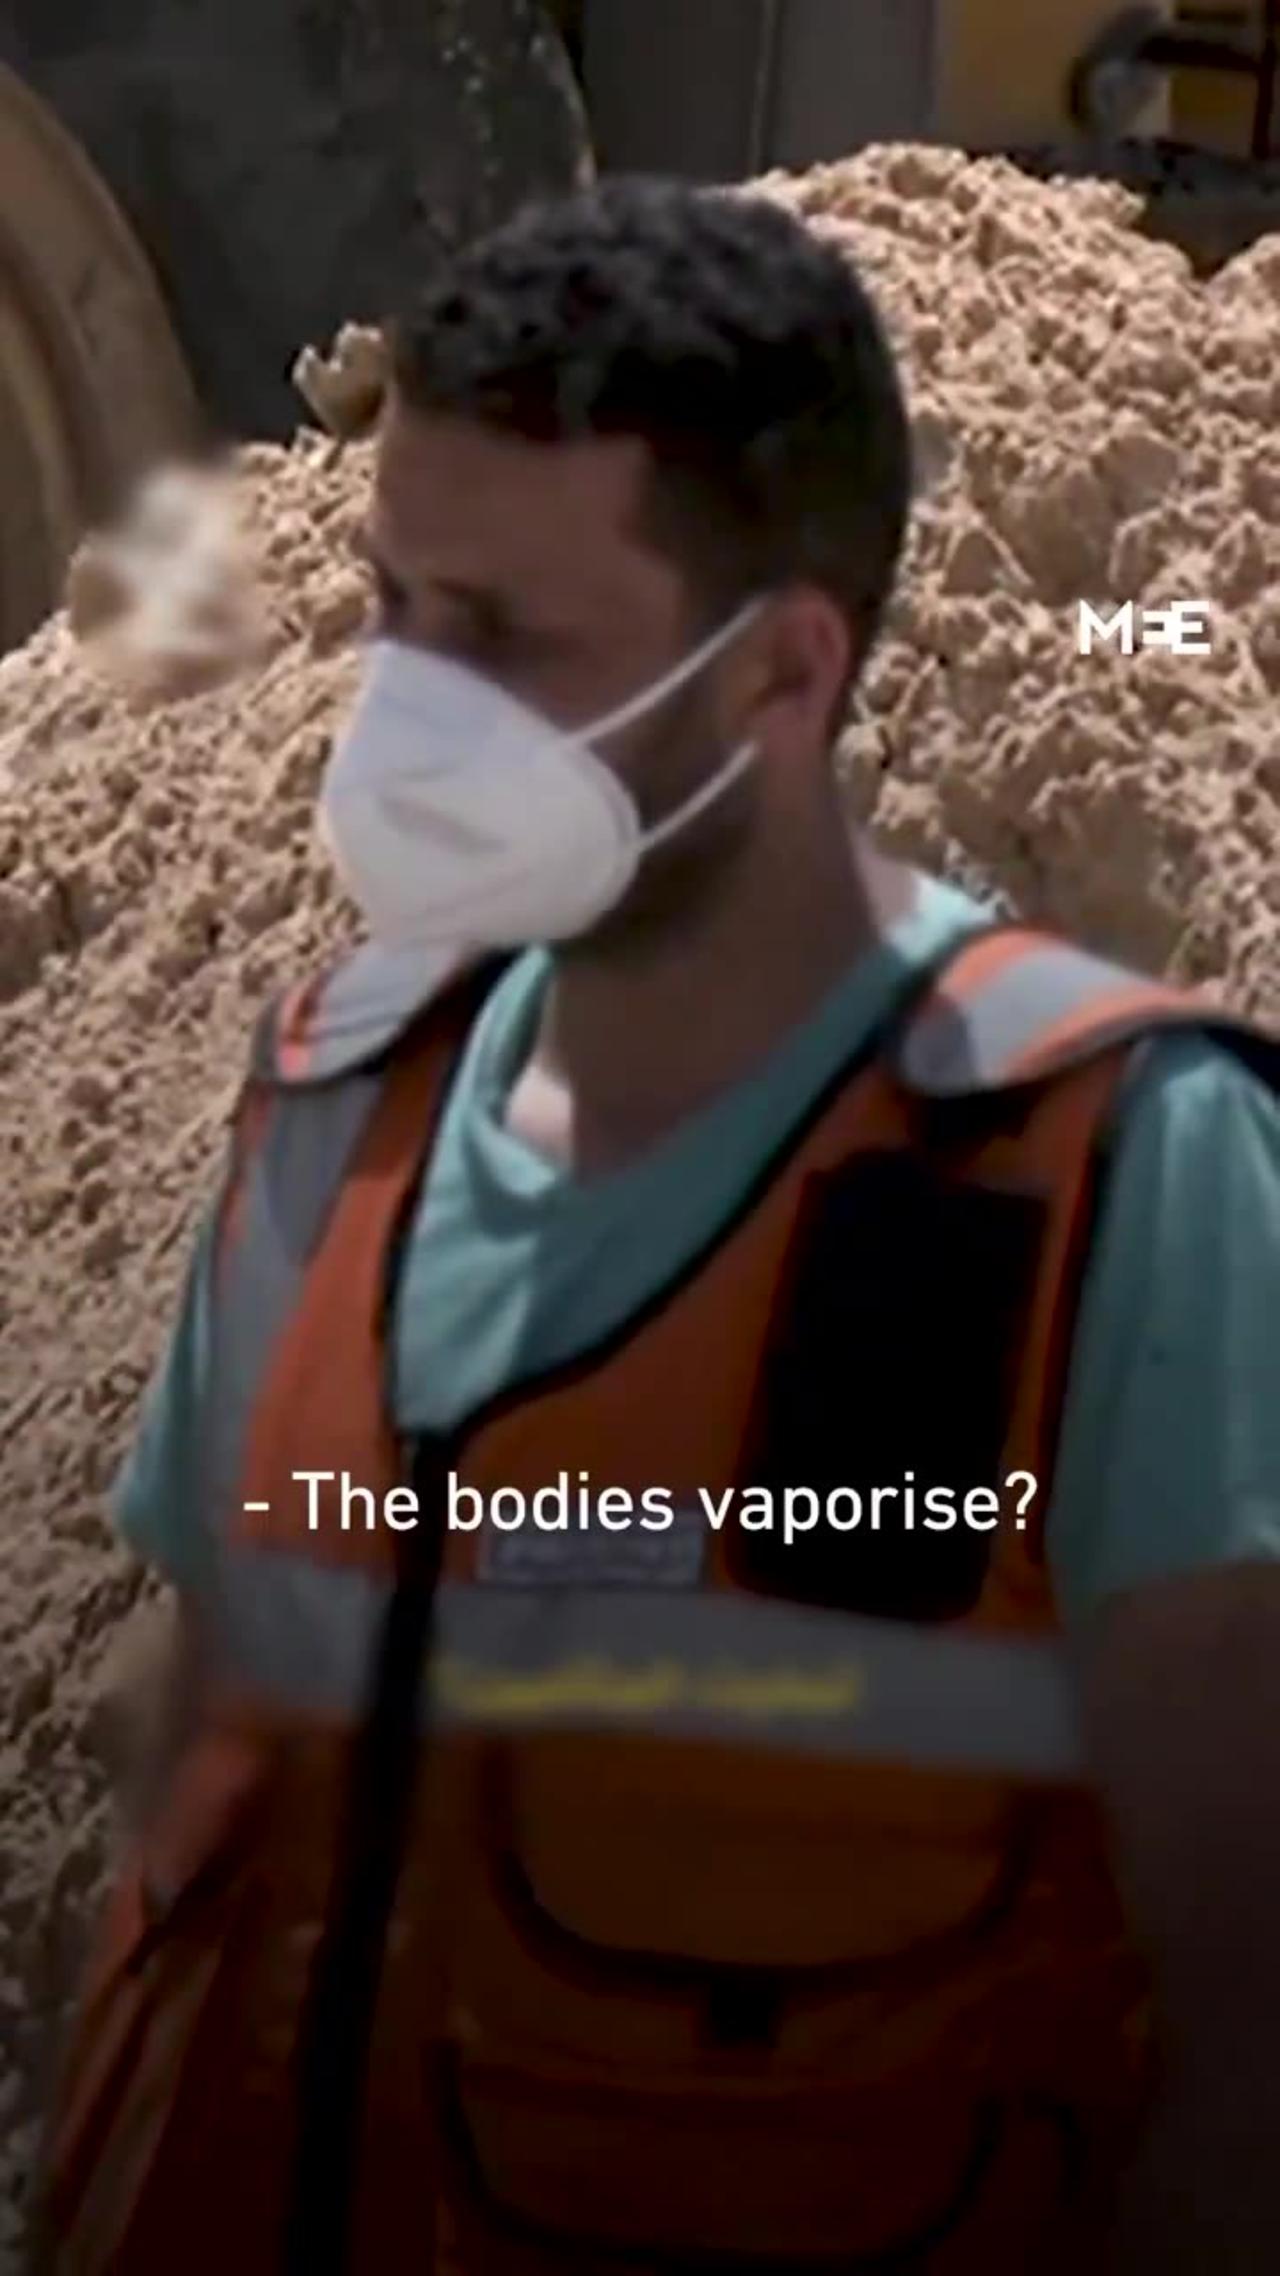 Israel using advanced weapon that vaporises bodies?